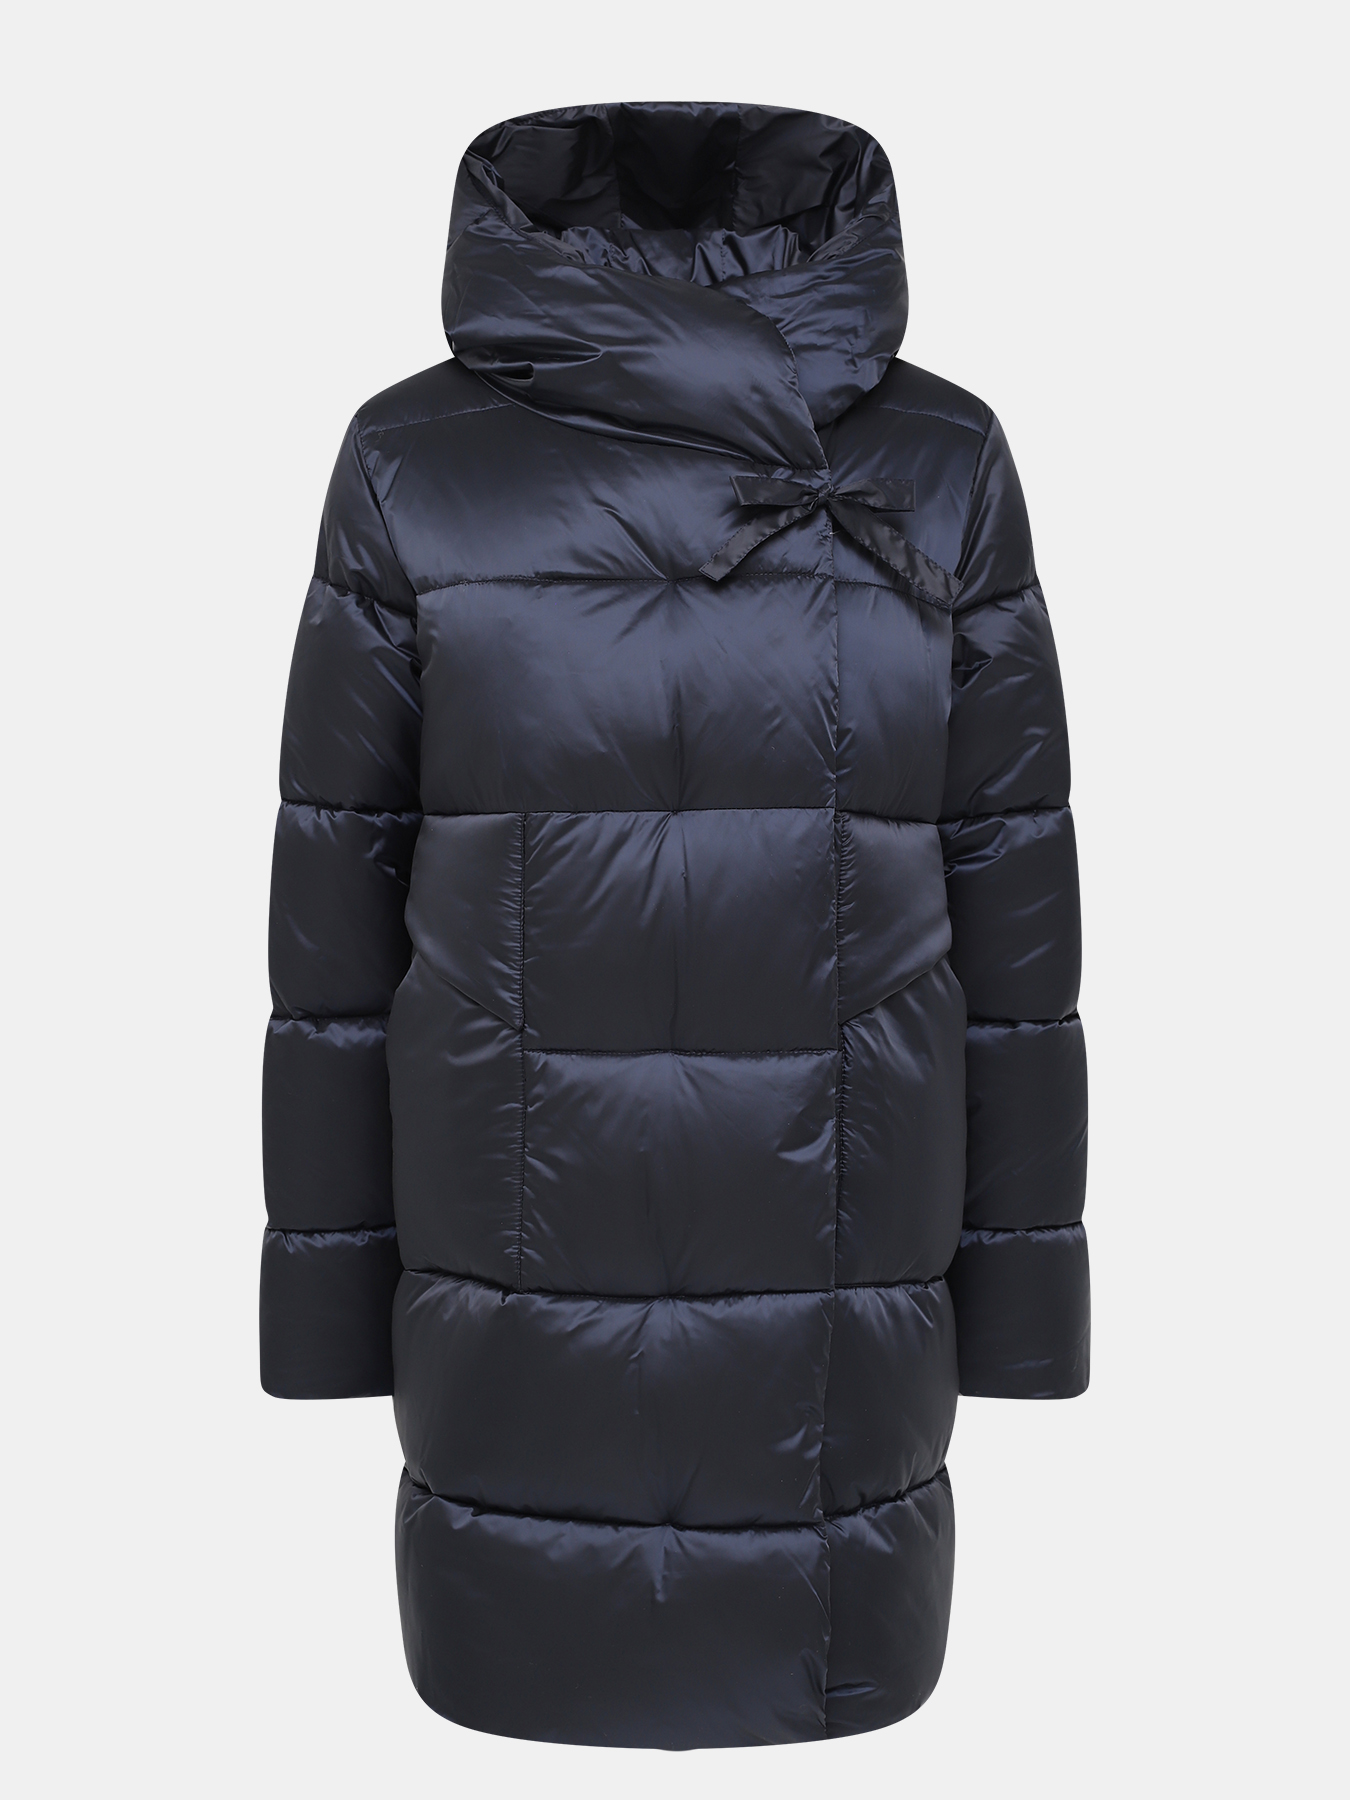 Пальто зимнее Maritta 433530-018, цвет темно-синий, размер 36 - фото 1